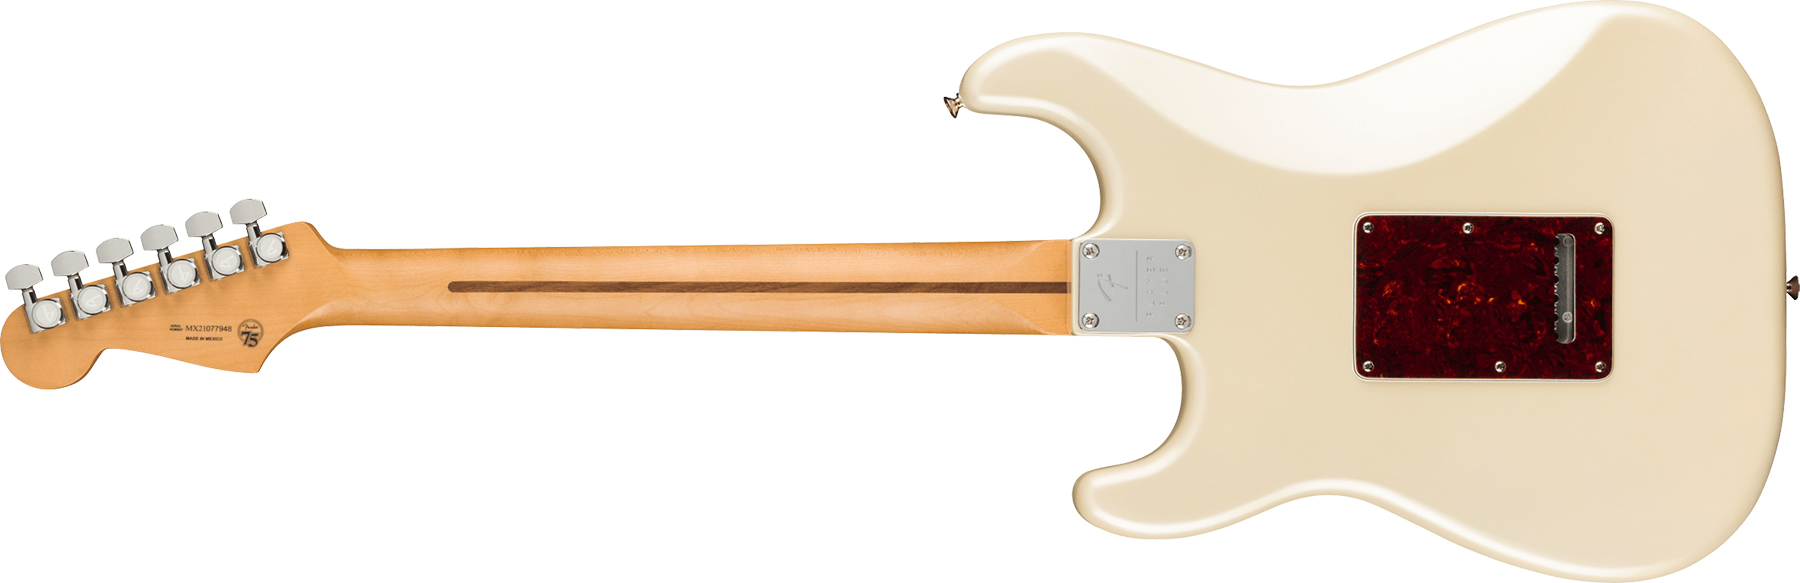 Fender Strat Player Plus Mex 3s Trem Mn - Olympic Pearl - Str shape electric guitar - Variation 1